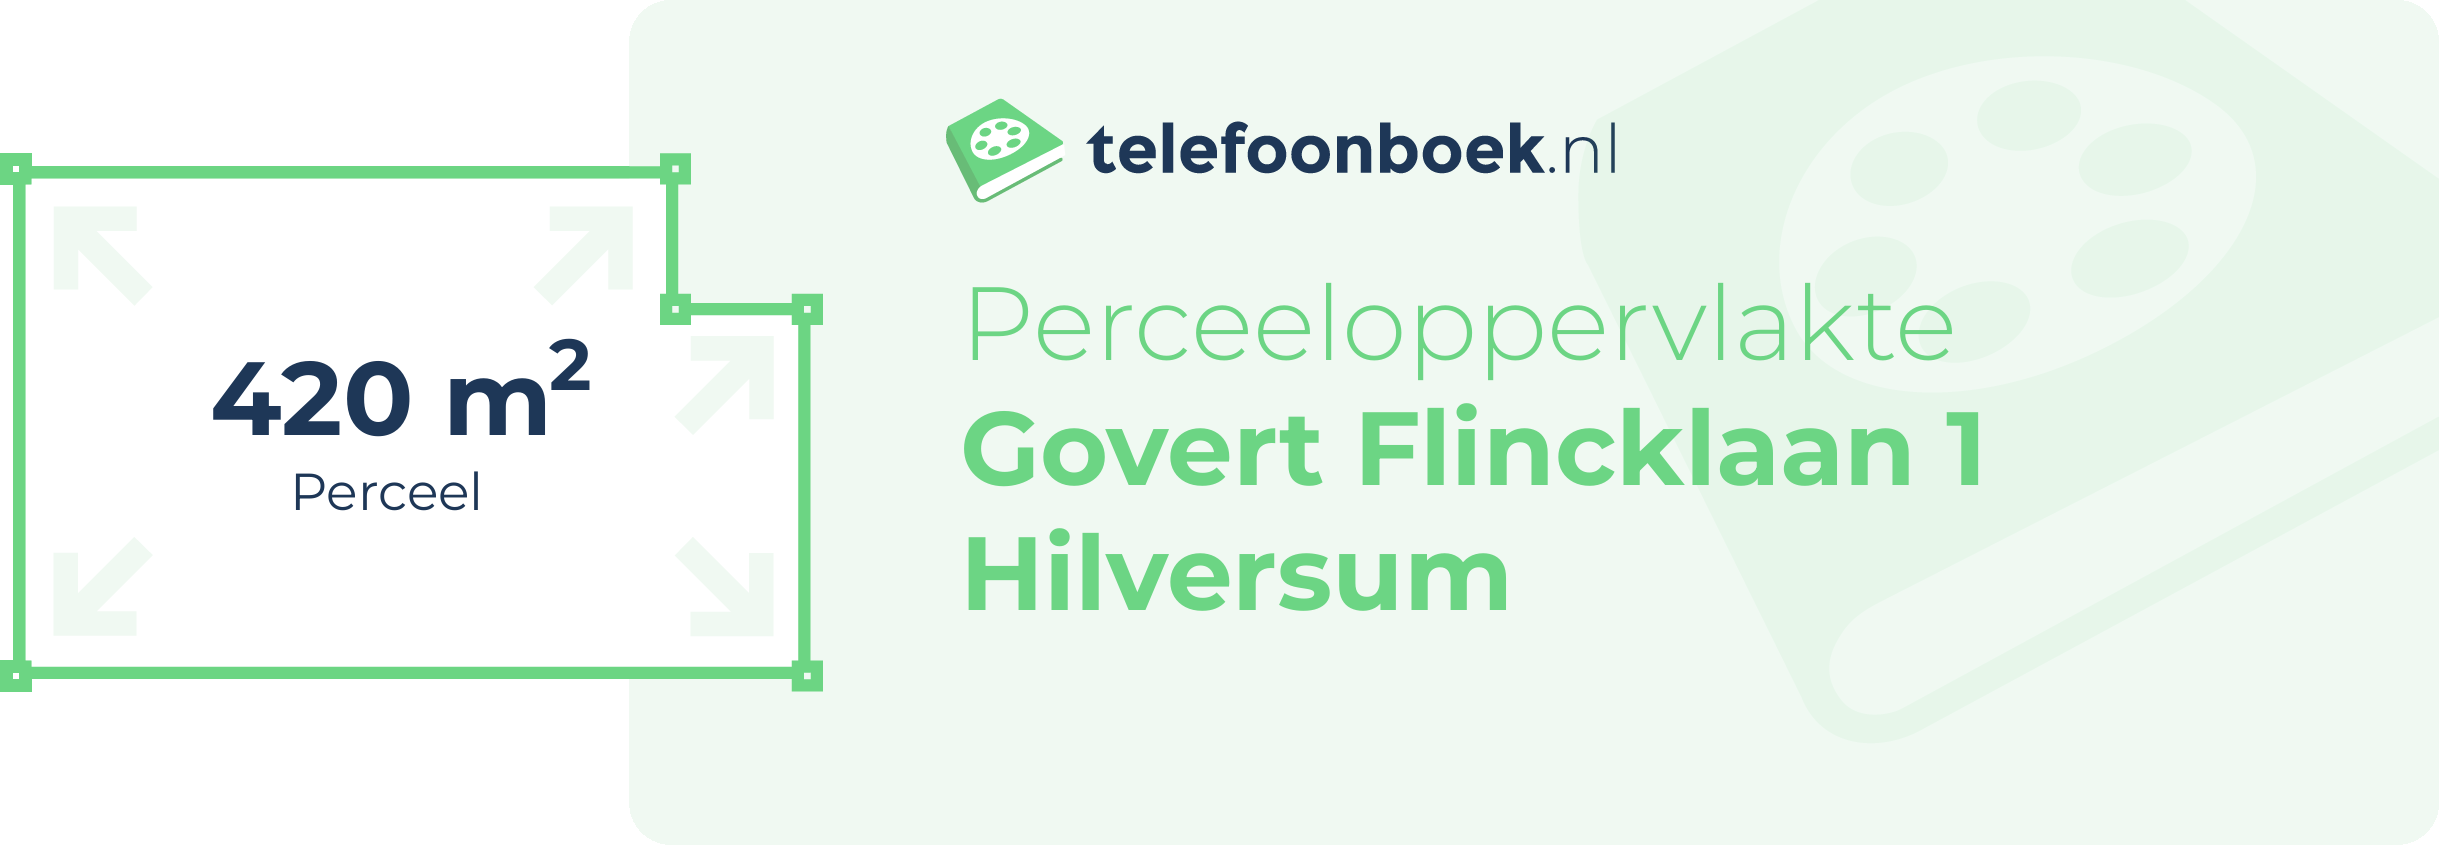 Perceeloppervlakte Govert Flincklaan 1 Hilversum